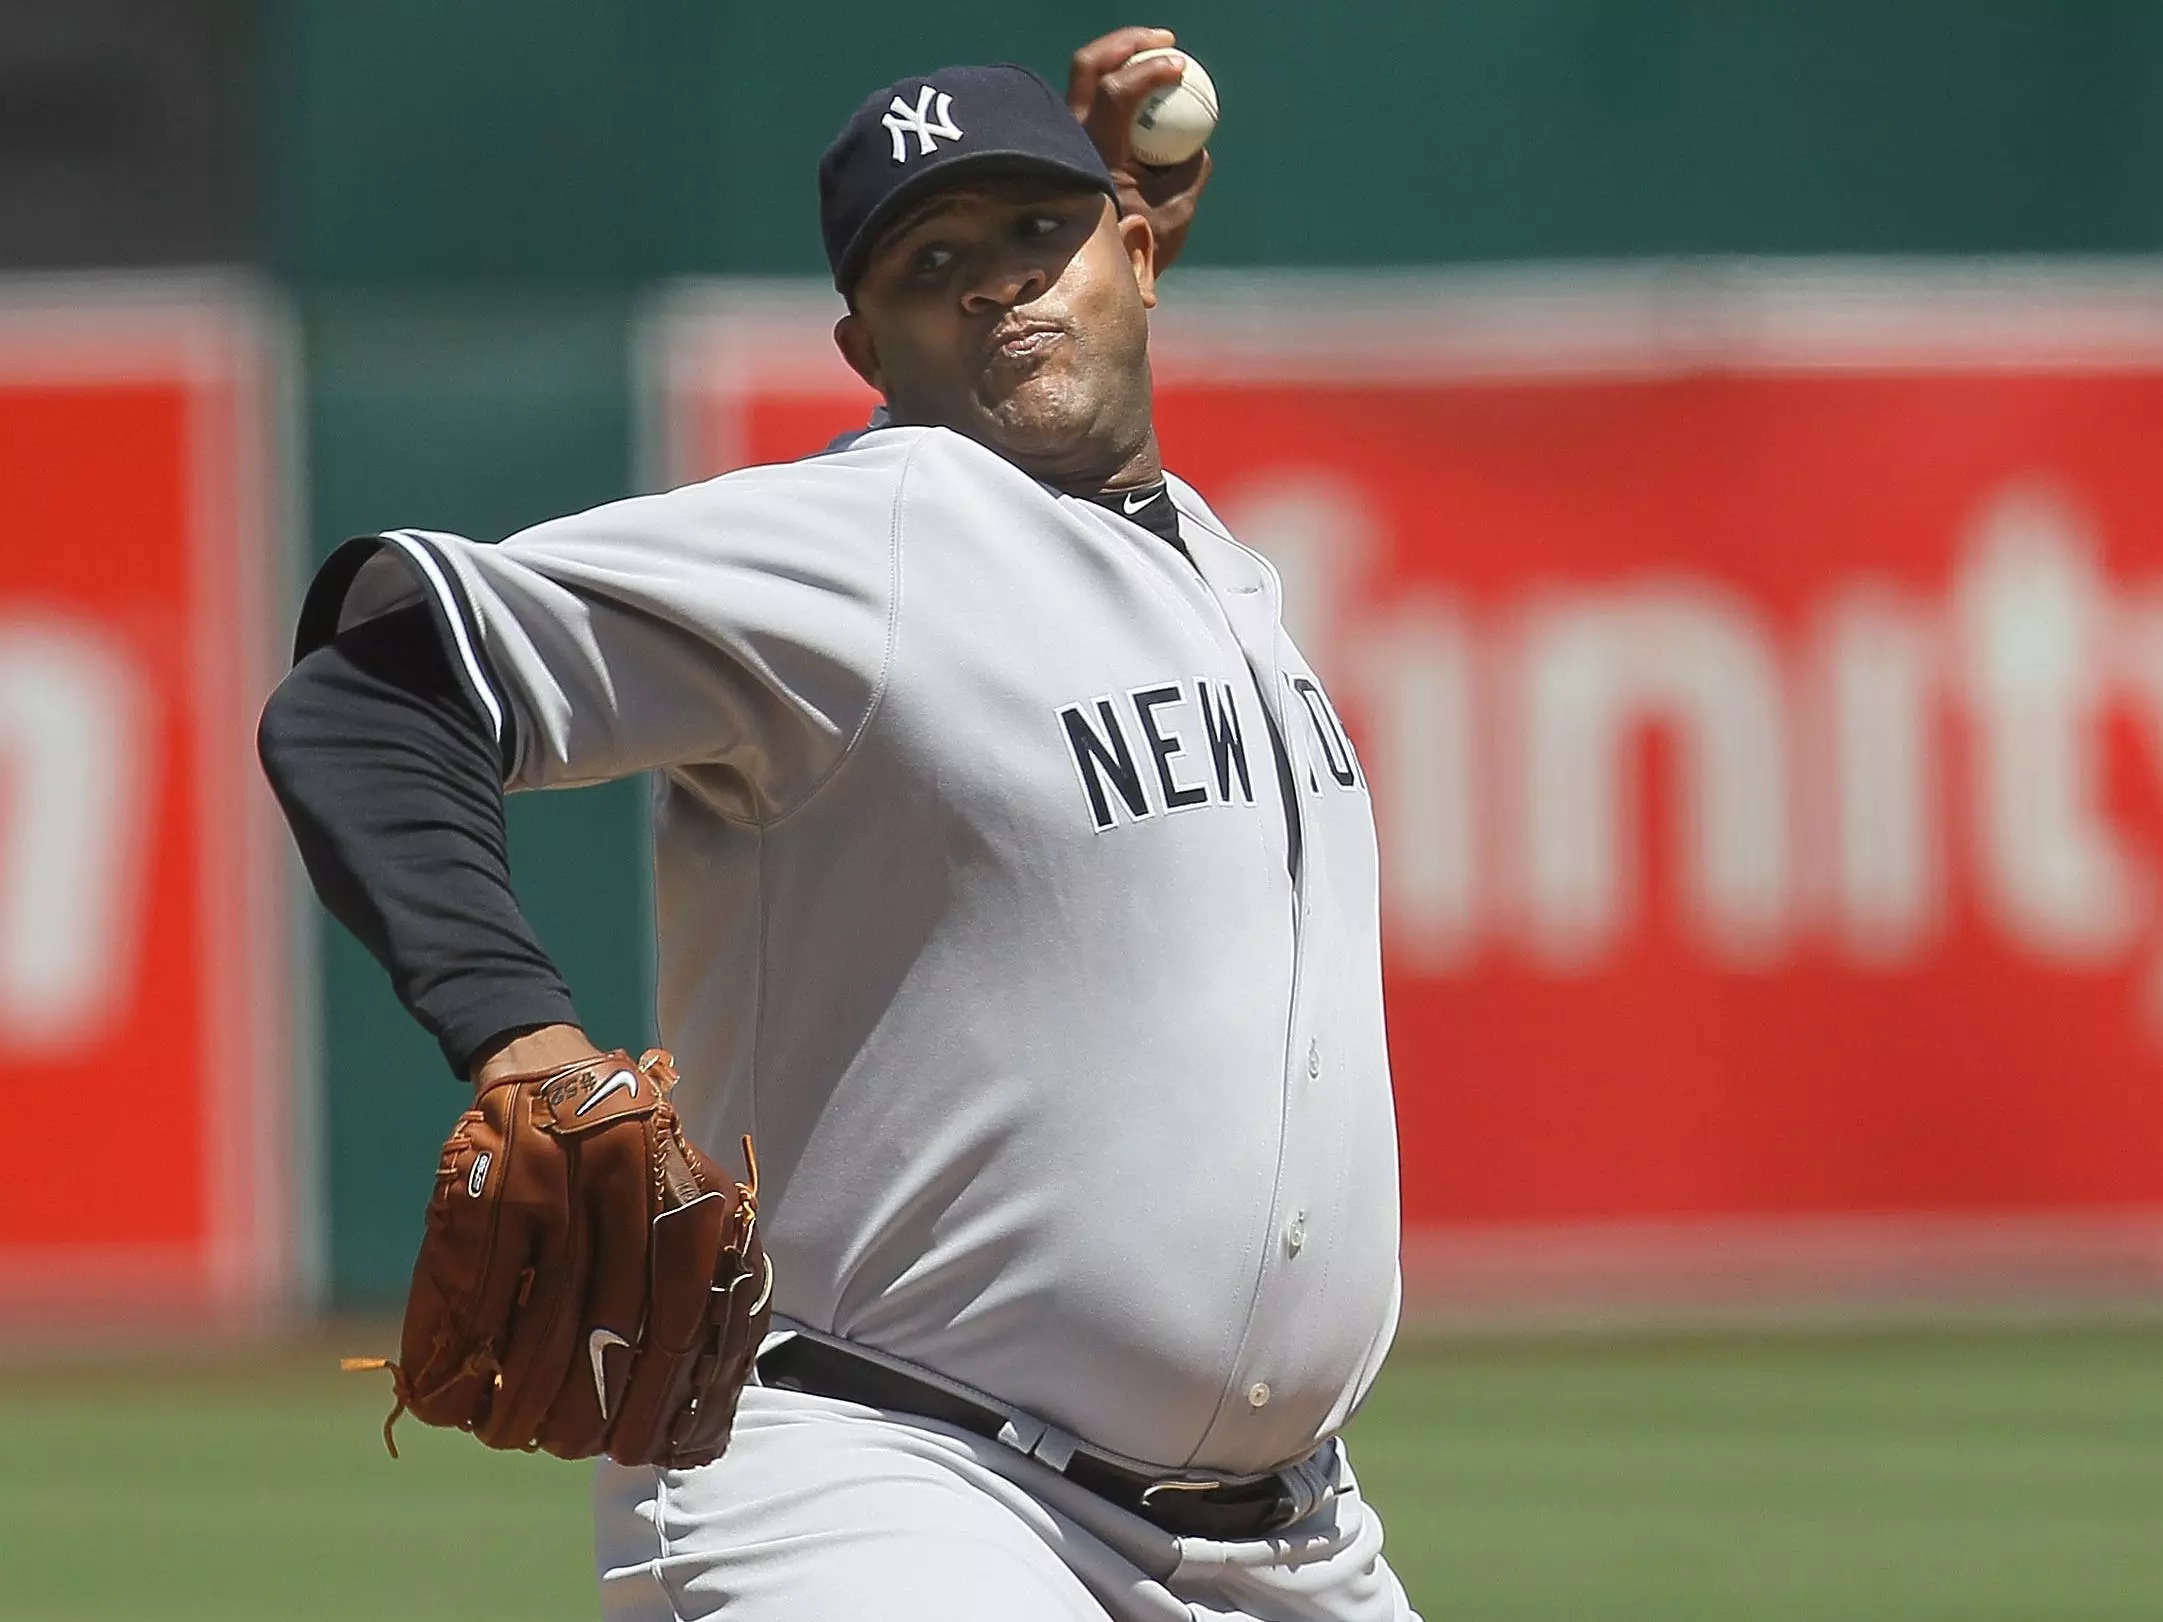 Yankees replace injured CC Sabathia, whose esteemed career is over